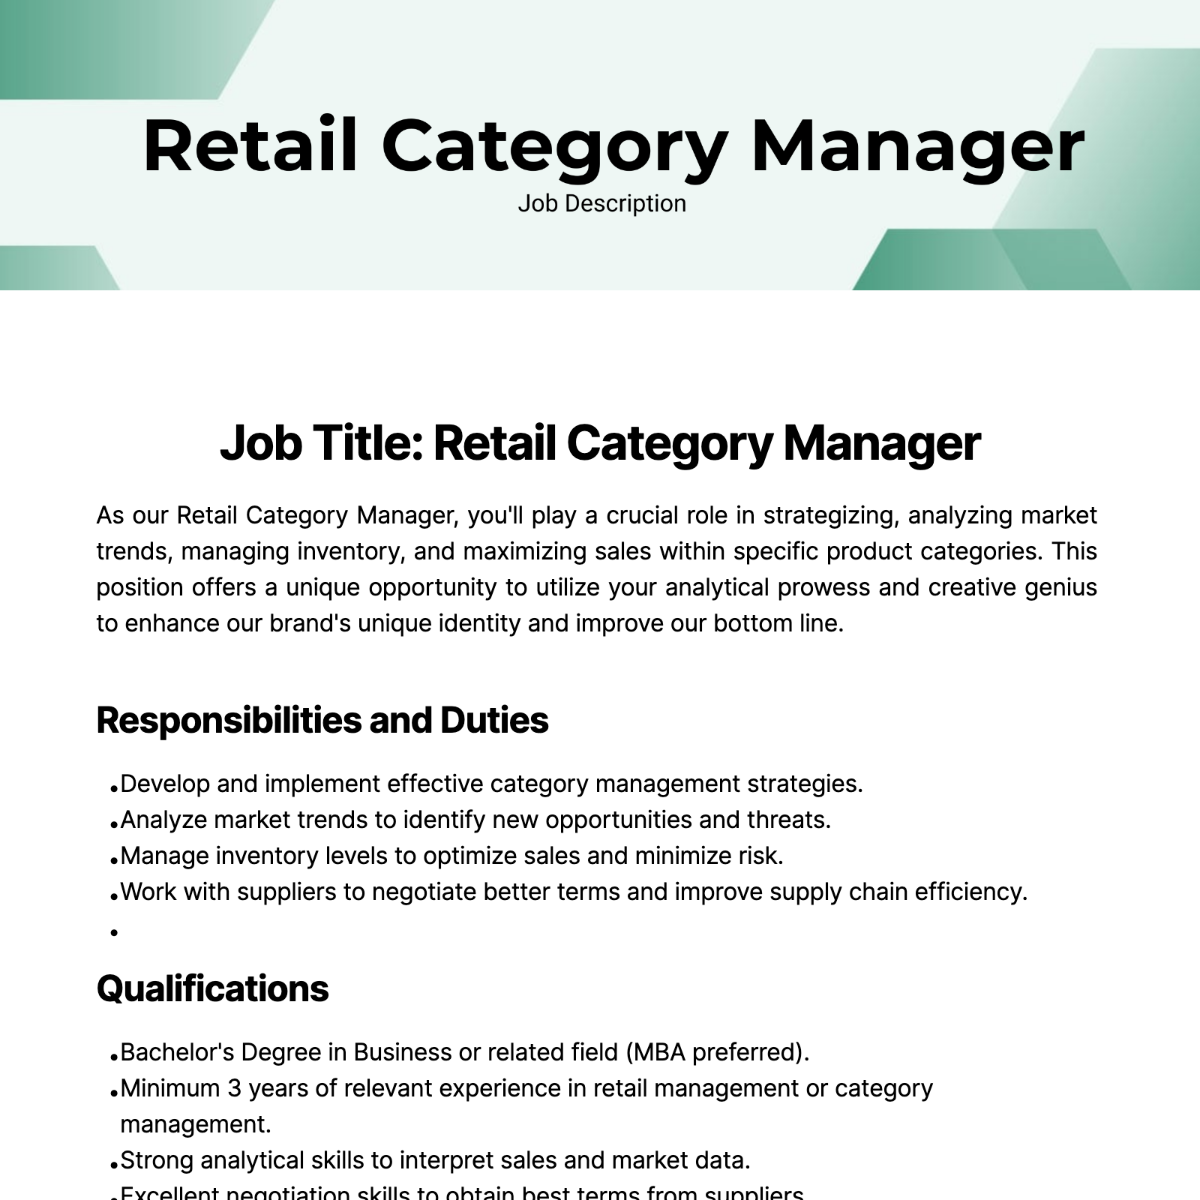 Retail Category Manager Job Description Template